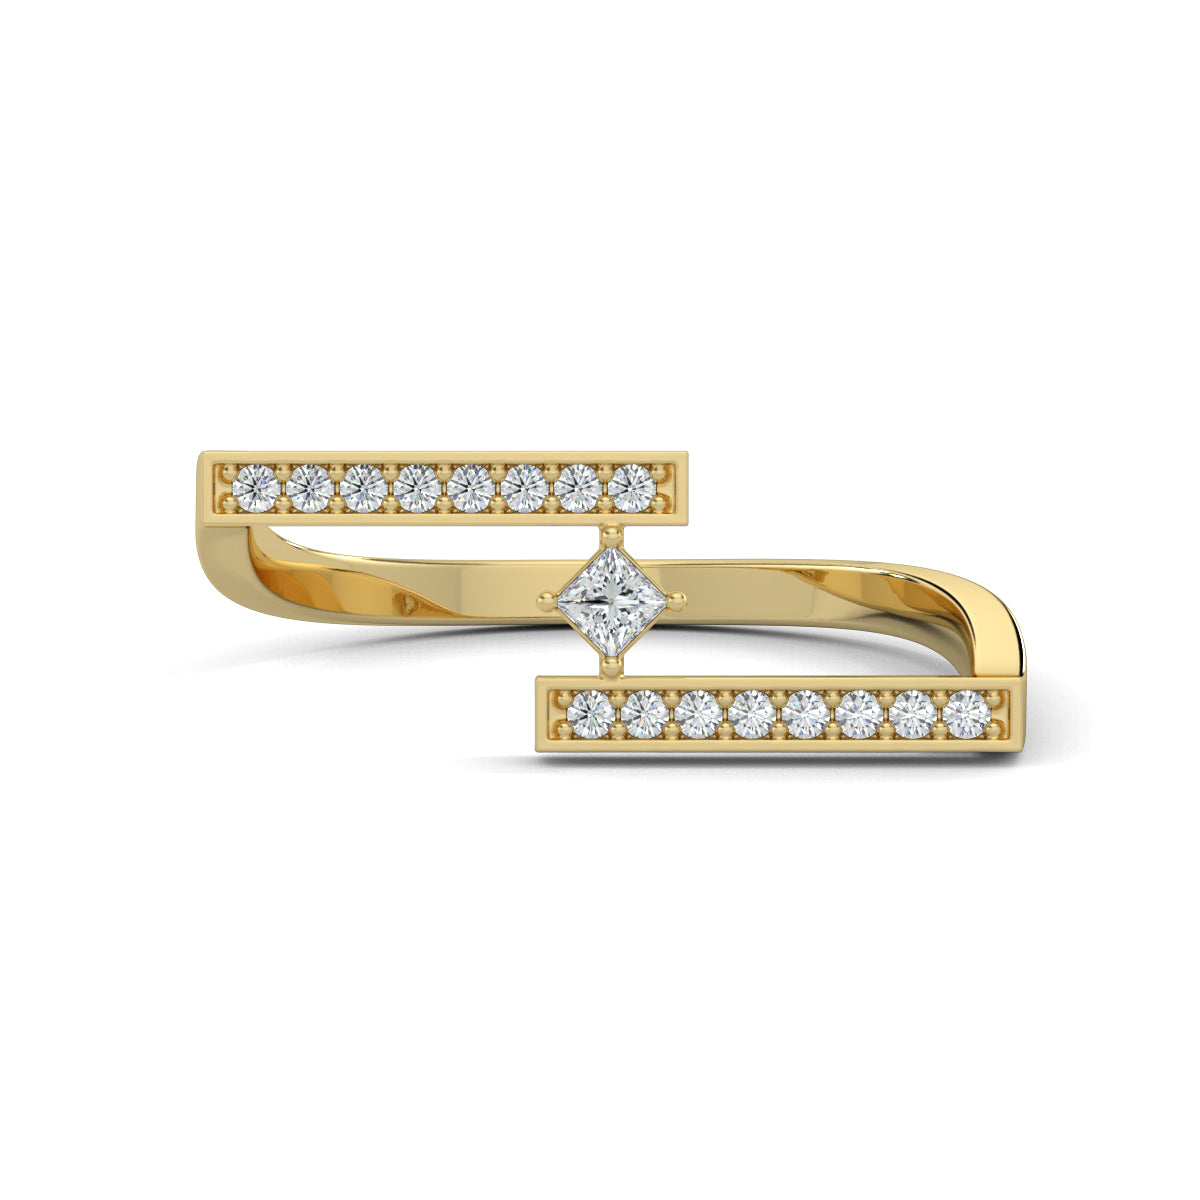 Yellow Gold, Diamond Ring,  Natural diamond ring, Lab-grown diamond ring, everyday diamond ring, open-ended band ring, round diamond accents, princess-cut diamond center, timeless elegance, modern luxury.